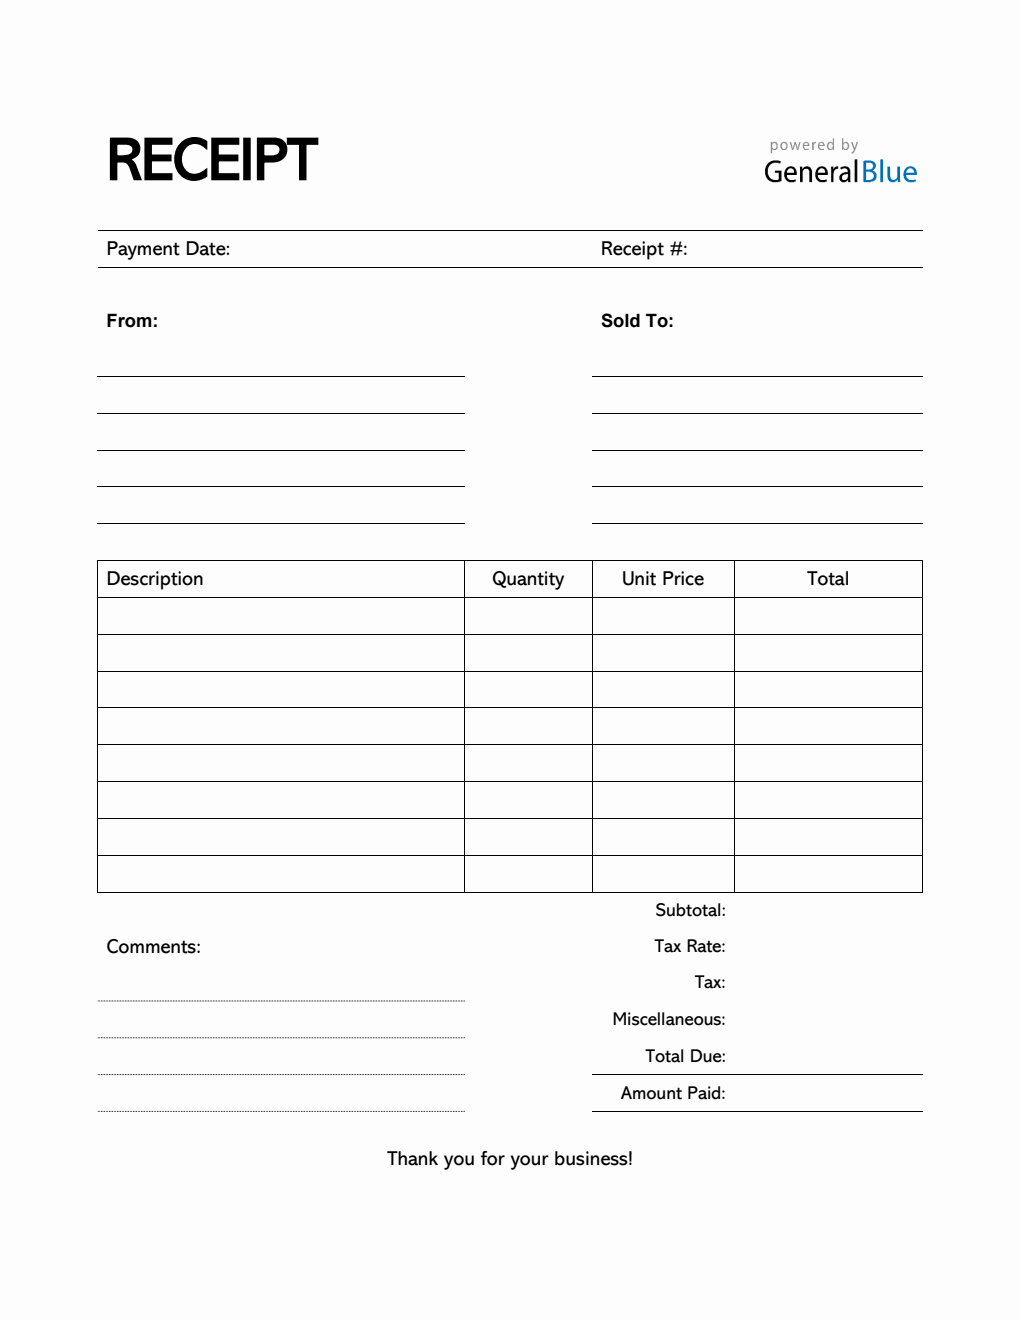 Receipt Template in PDF (Simple)